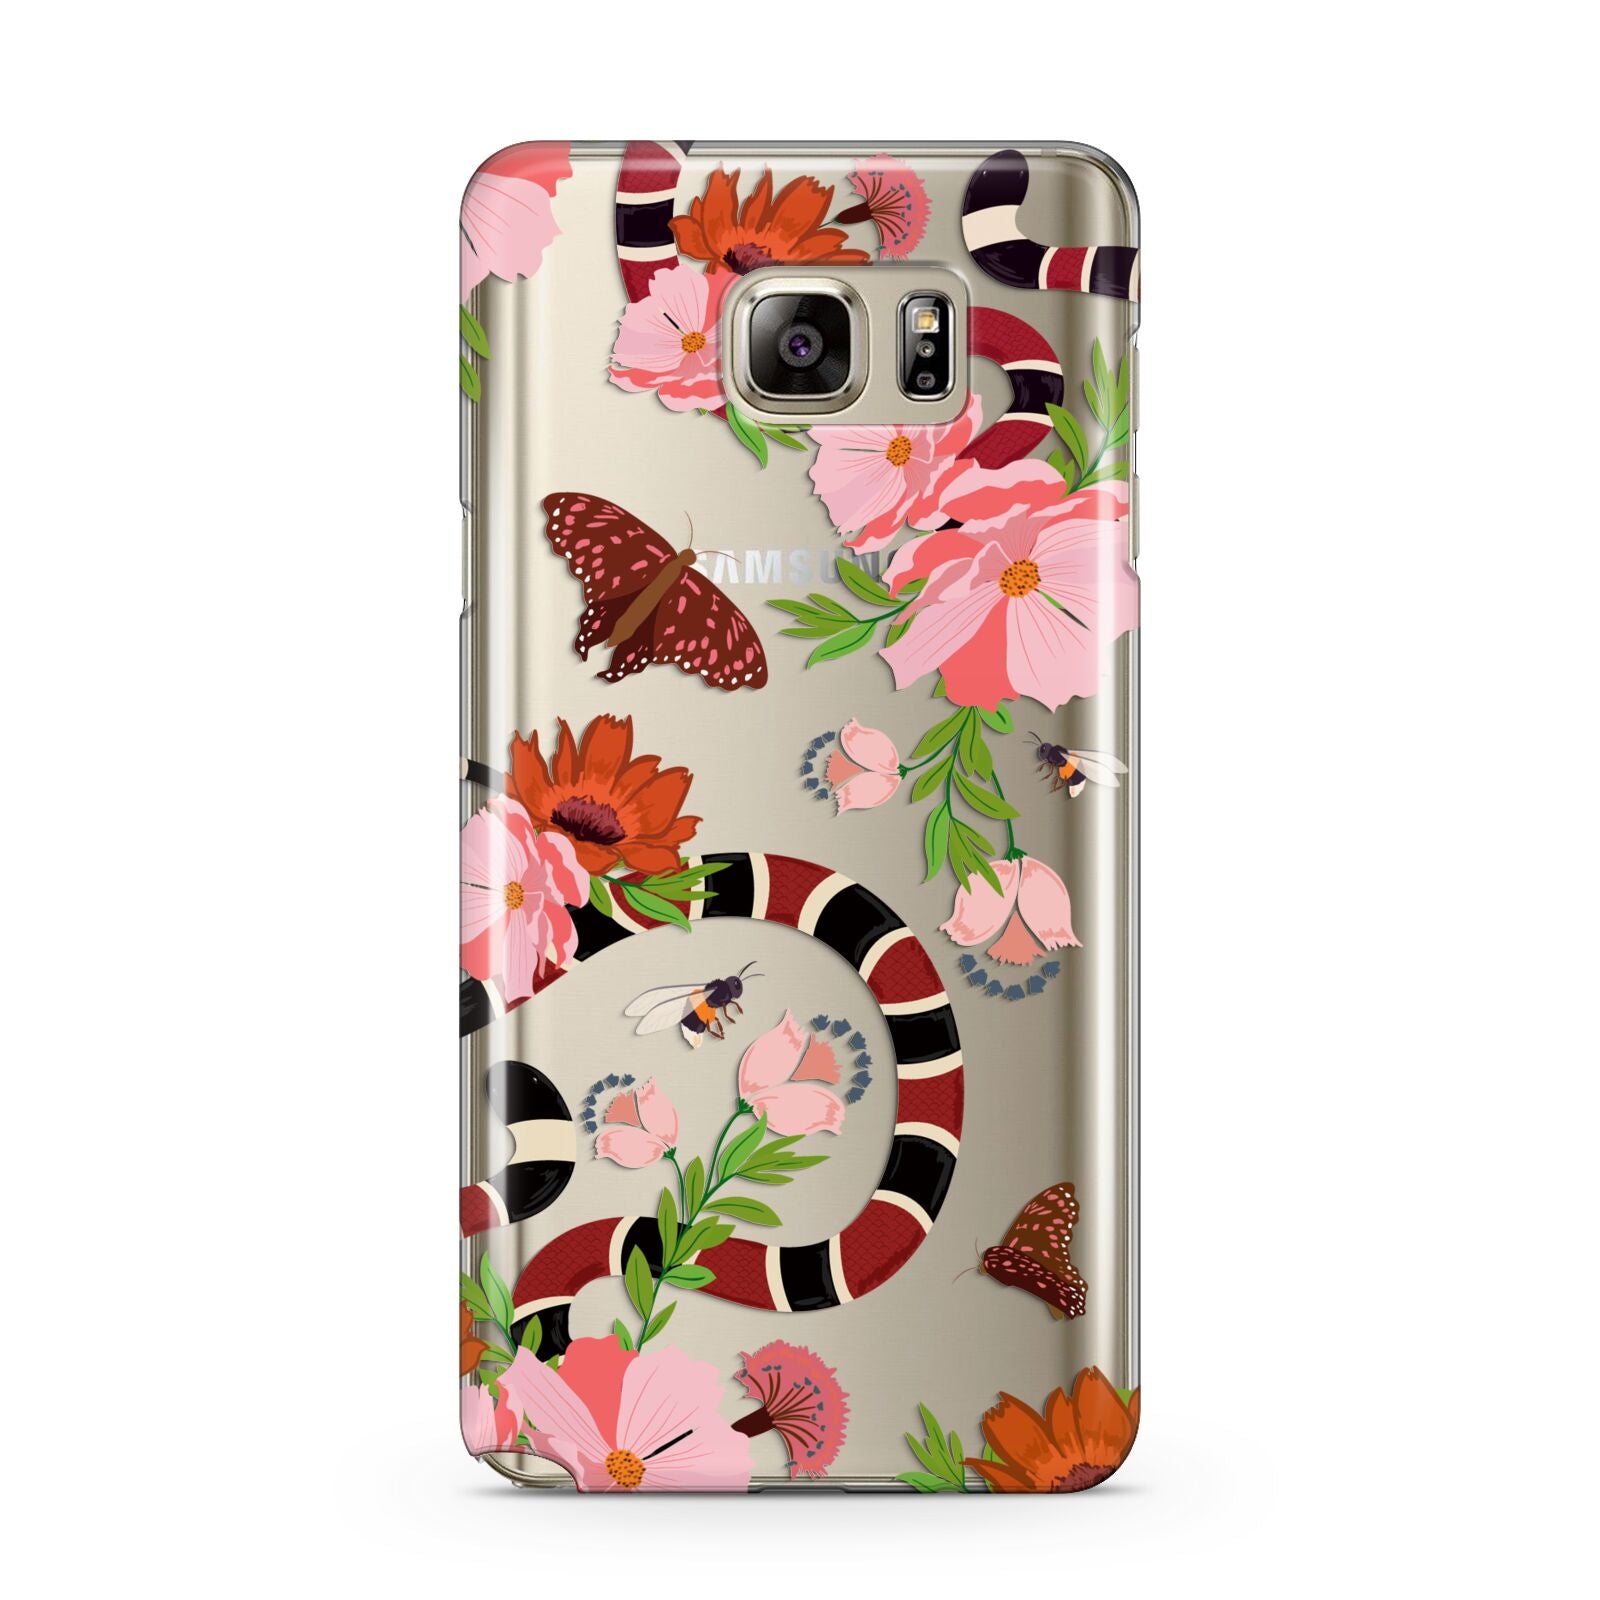 Floral Snake Samsung Galaxy Note 5 Case